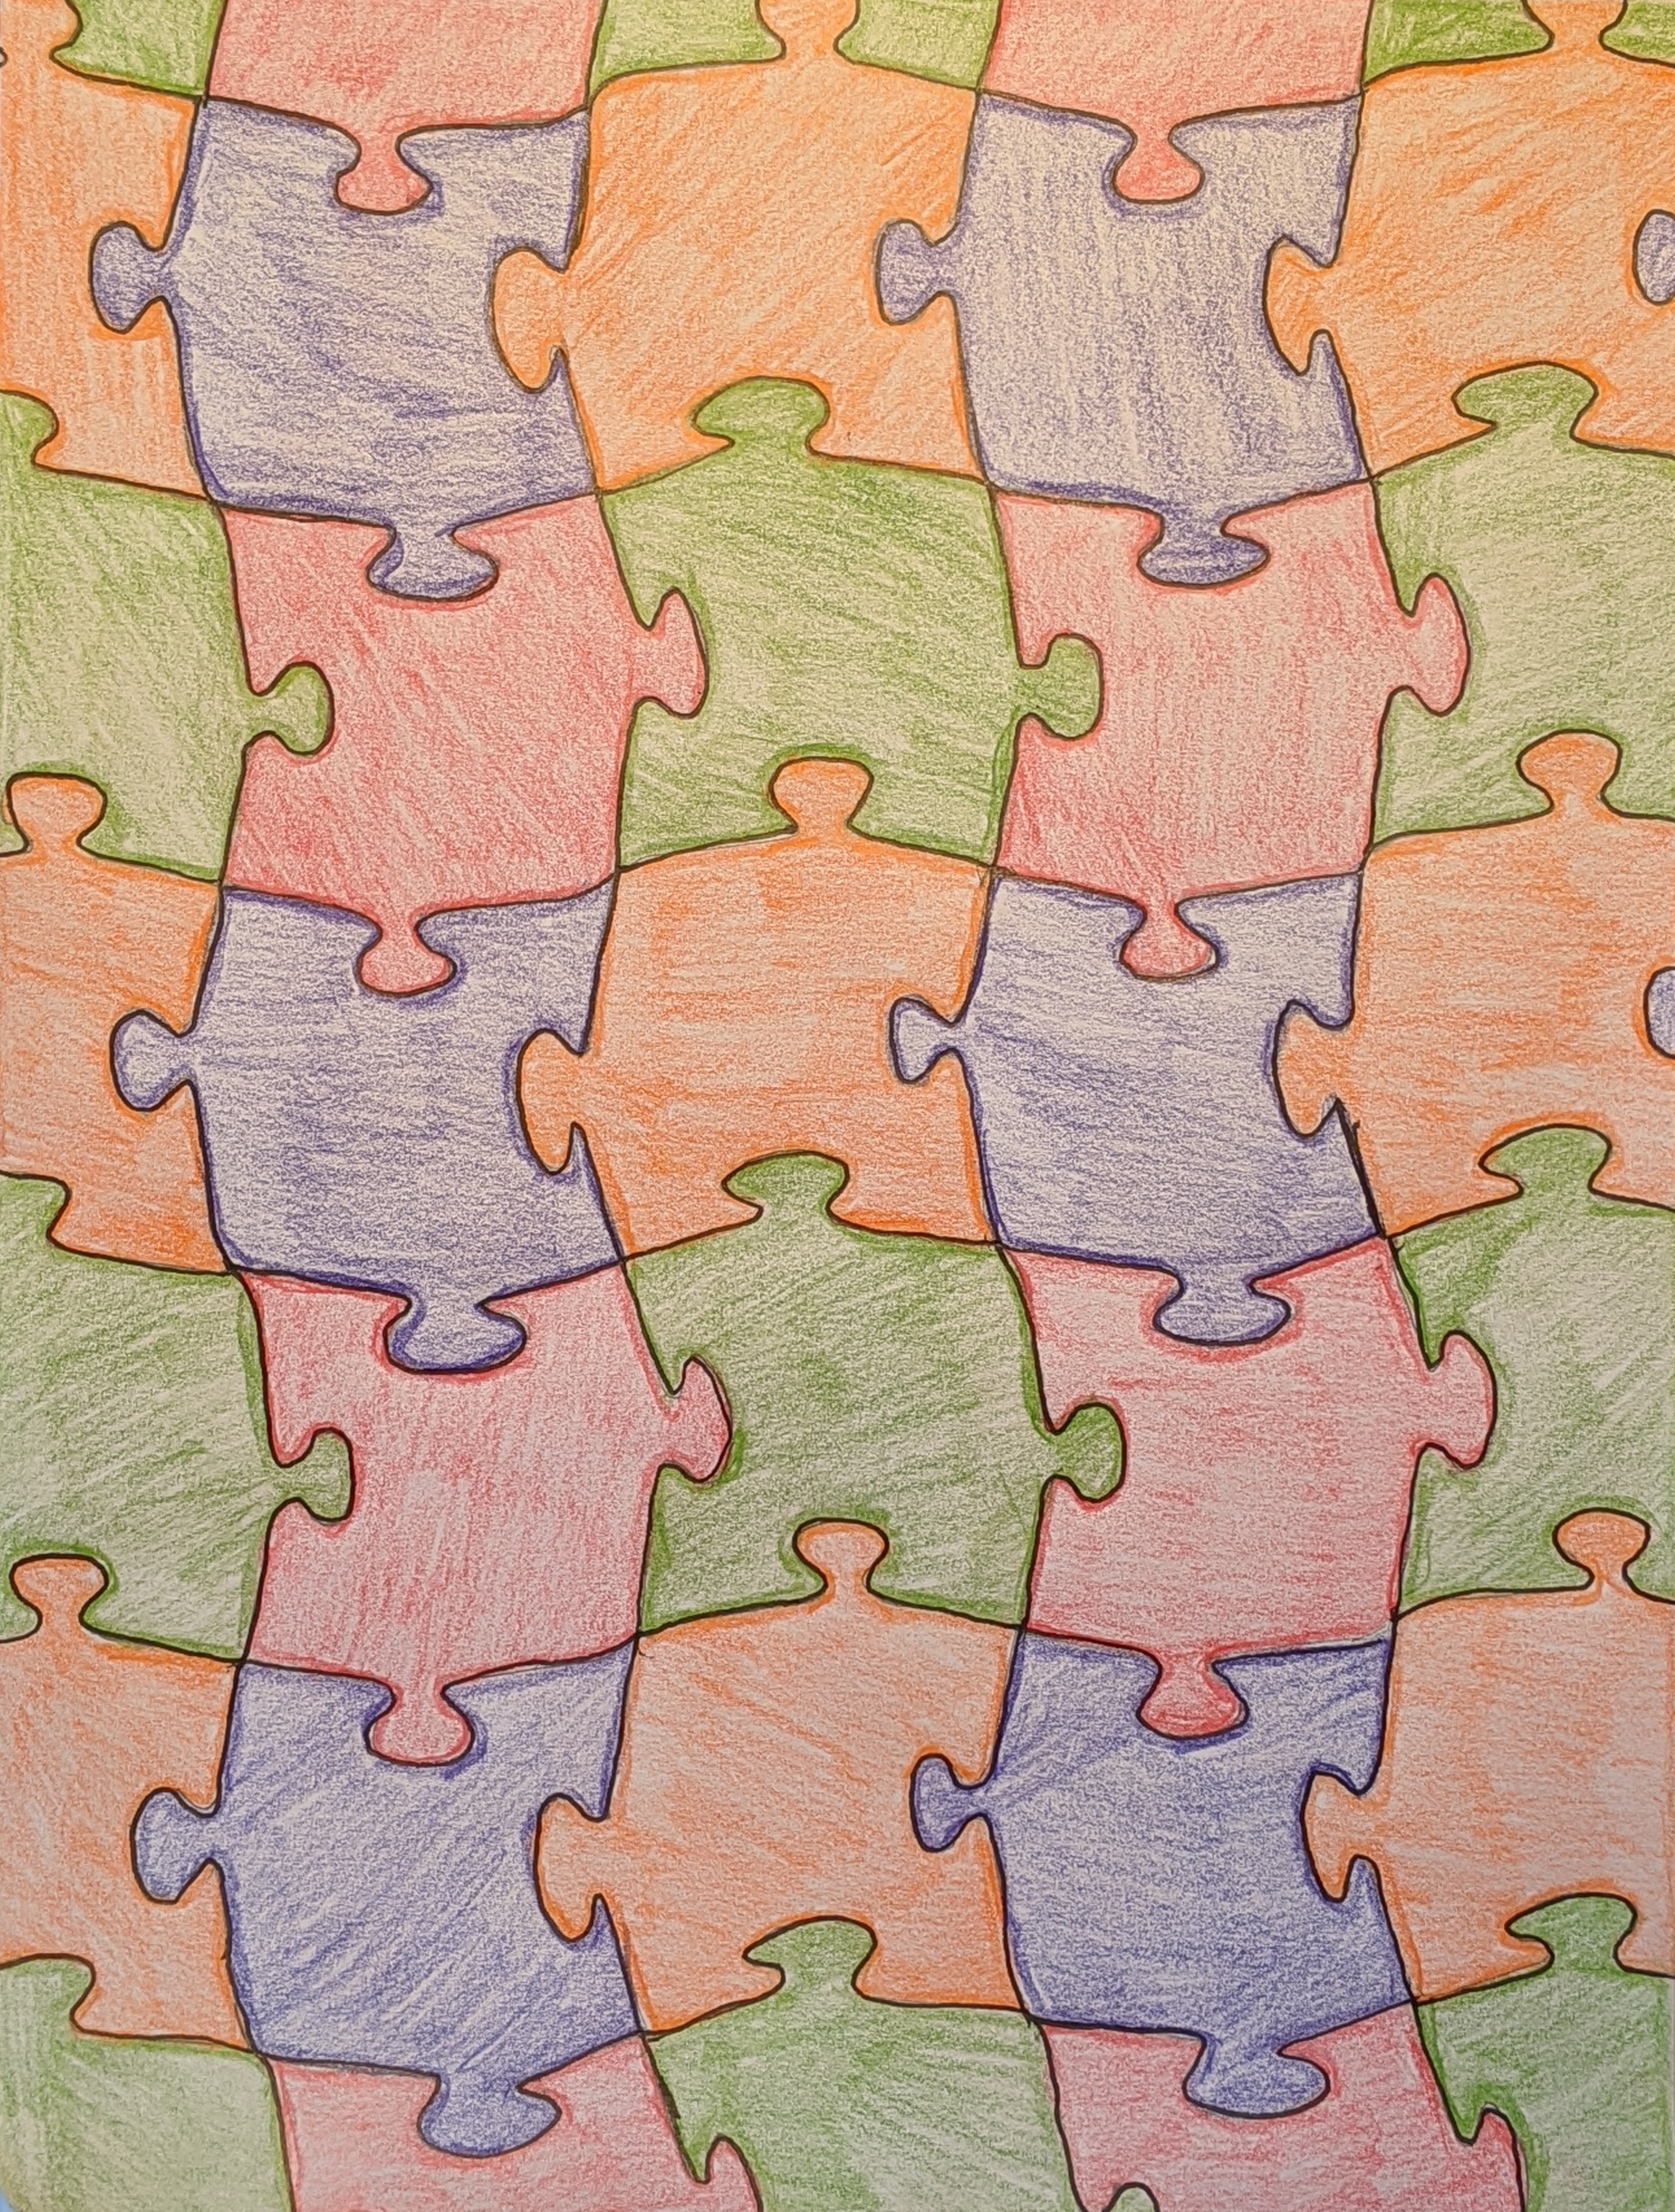 25. Tessellations